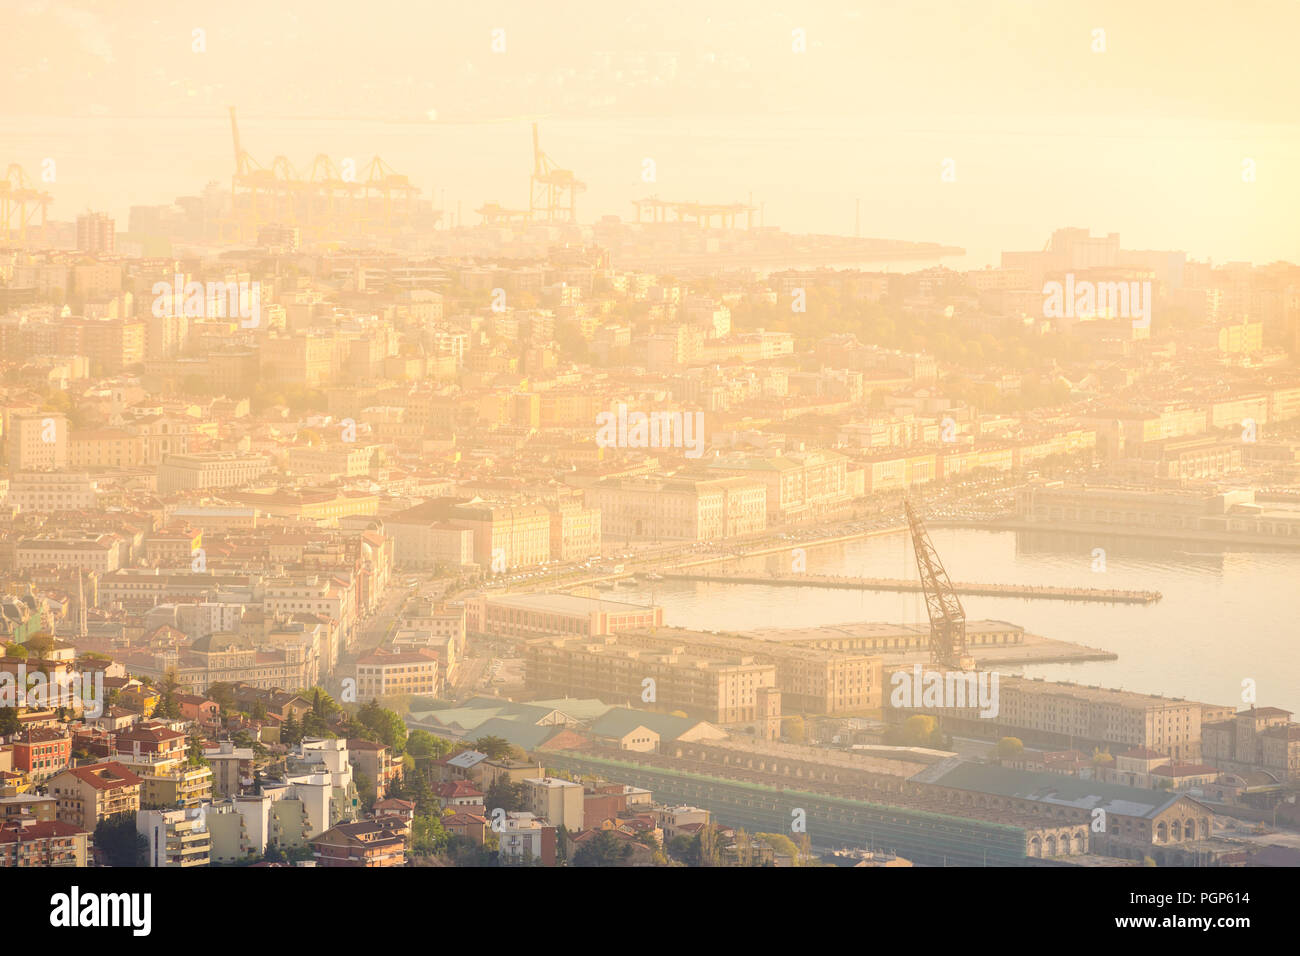 Antenna vista panoramica di Trieste, Italia, Europa. Foto Stock